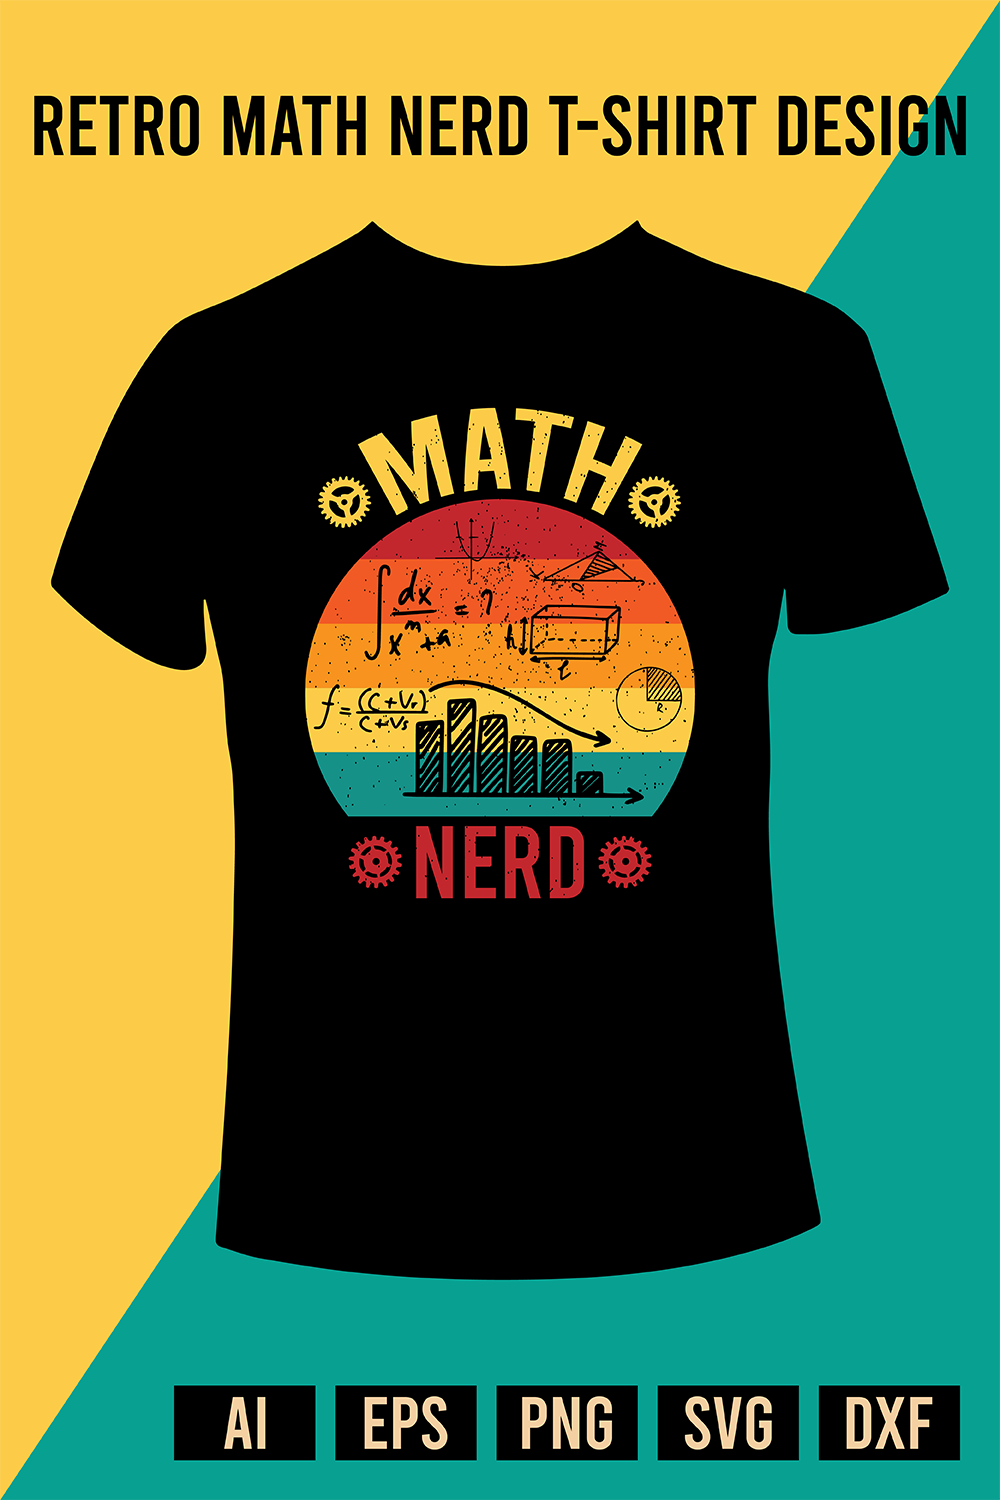 T-shirt Retro Math Nerd Design pinterest image.